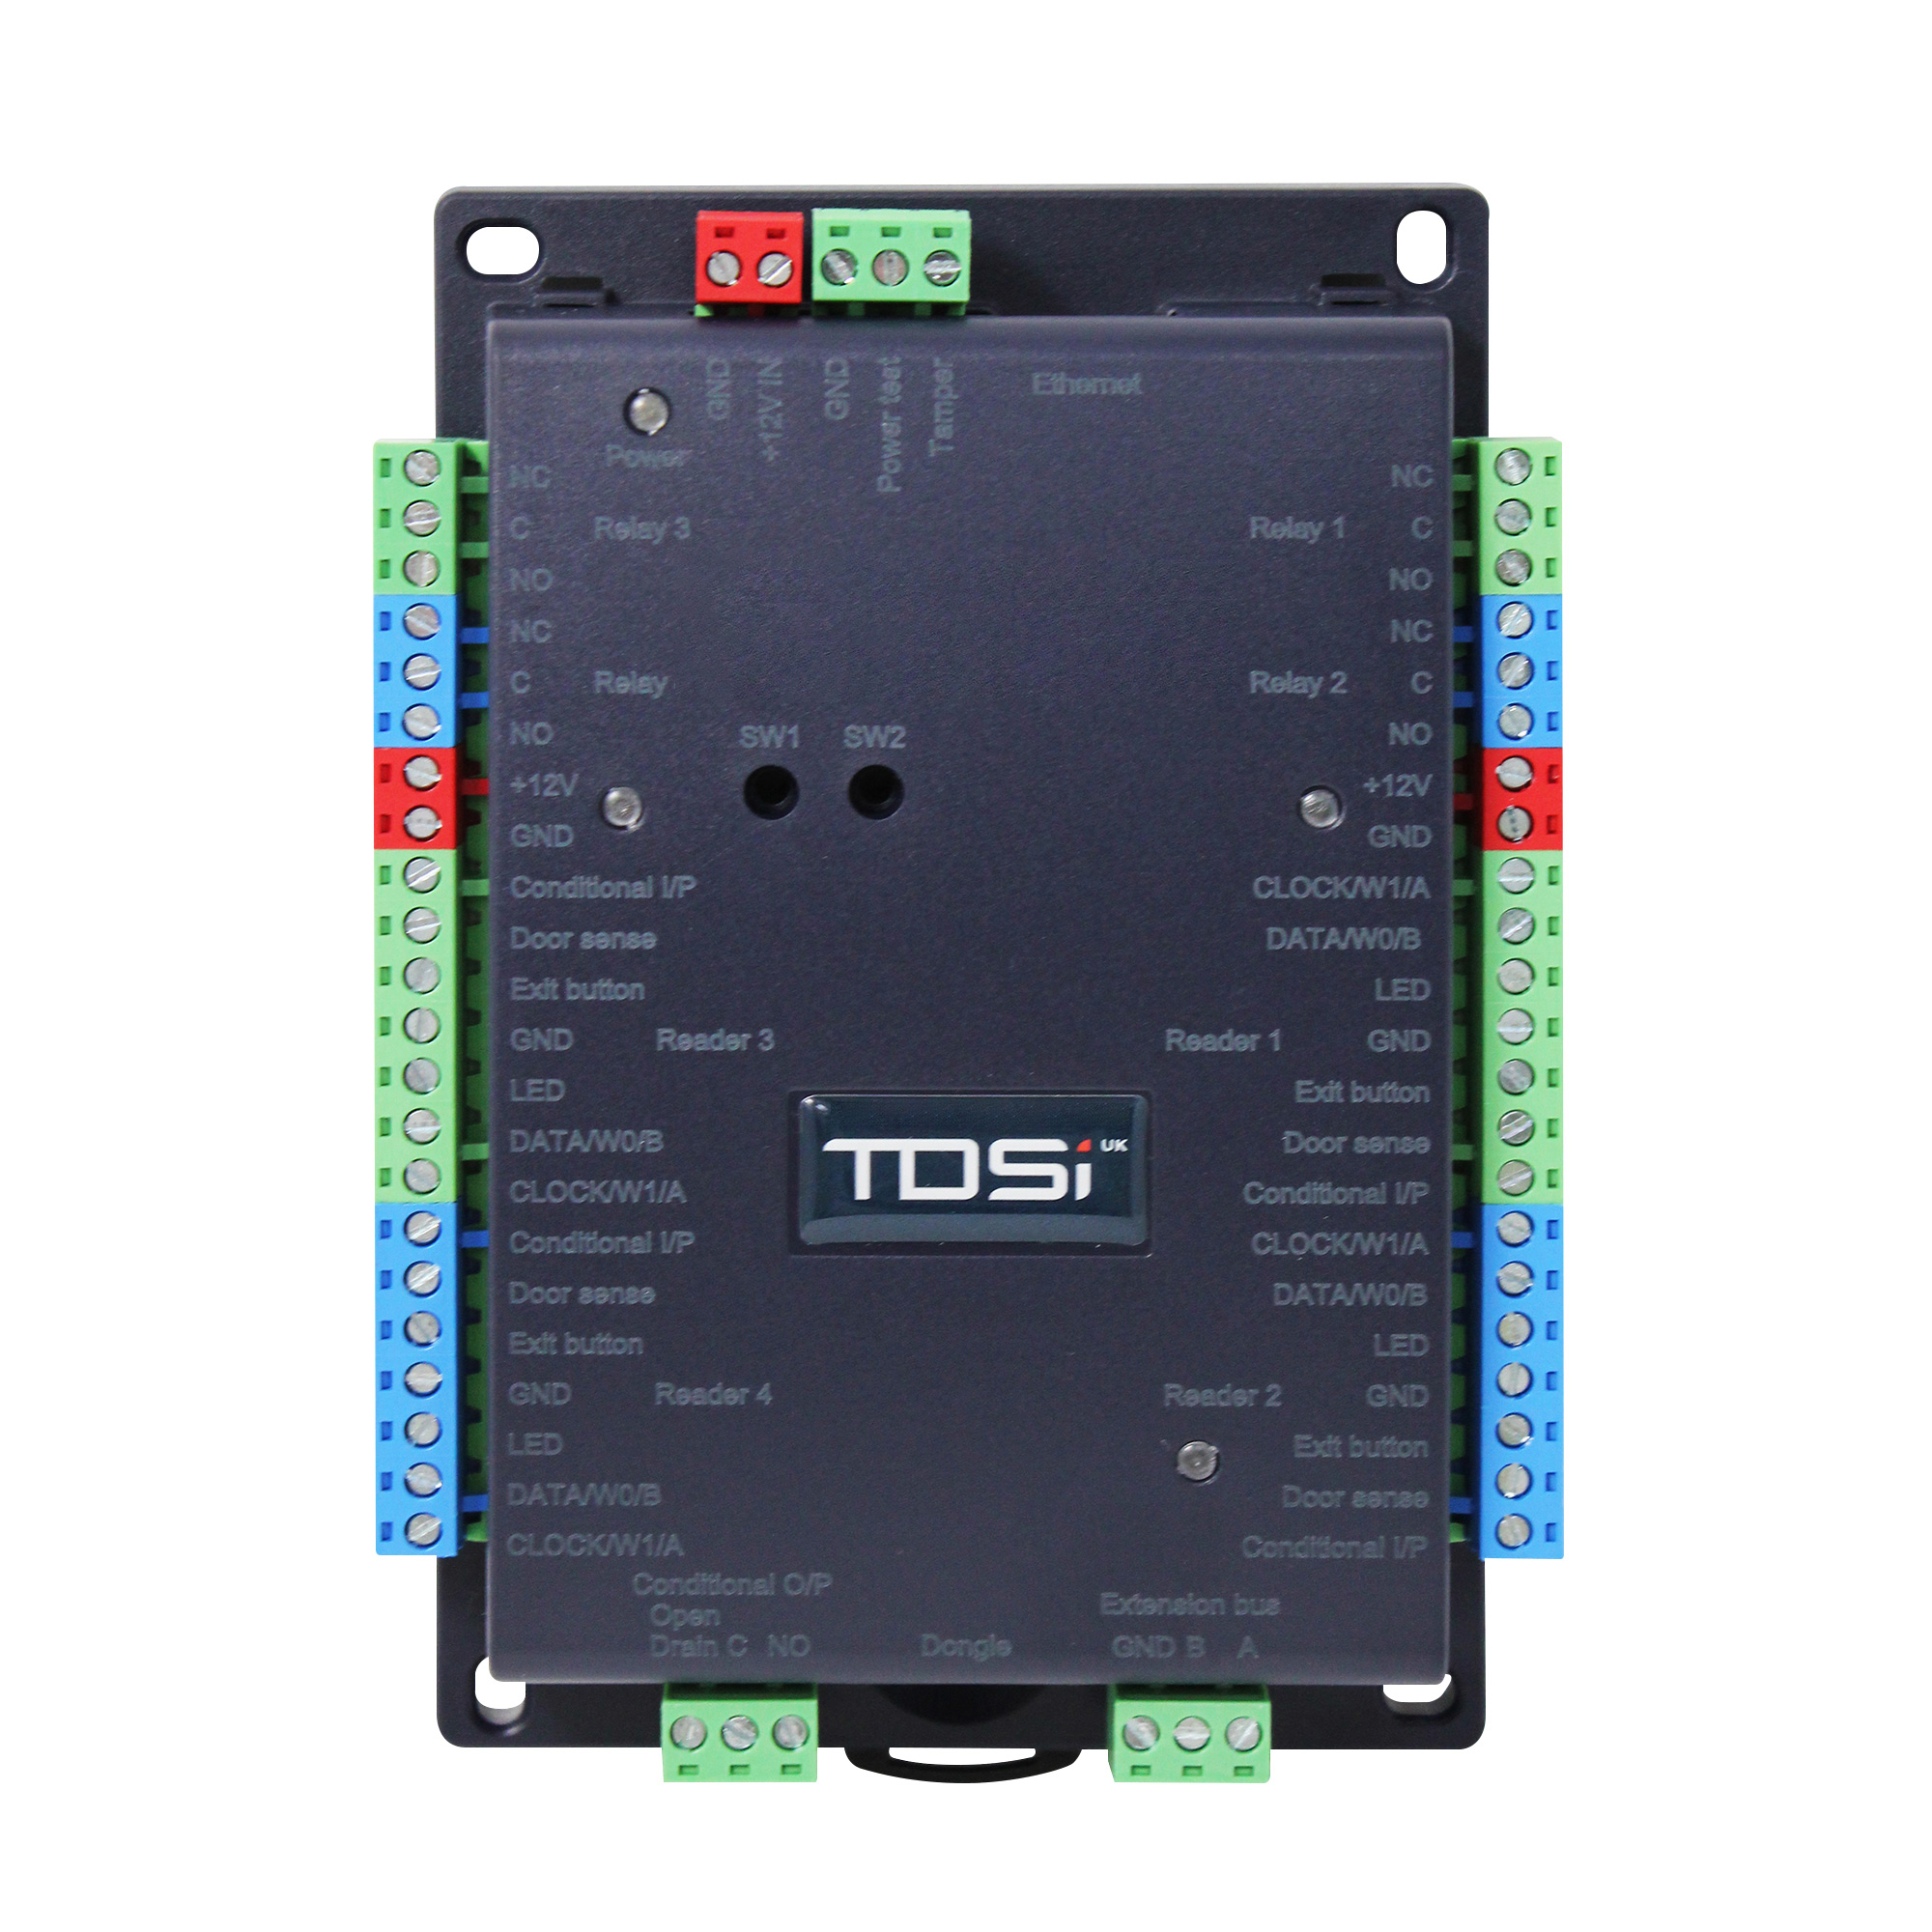 TDSi GARDiS Controller.jpg